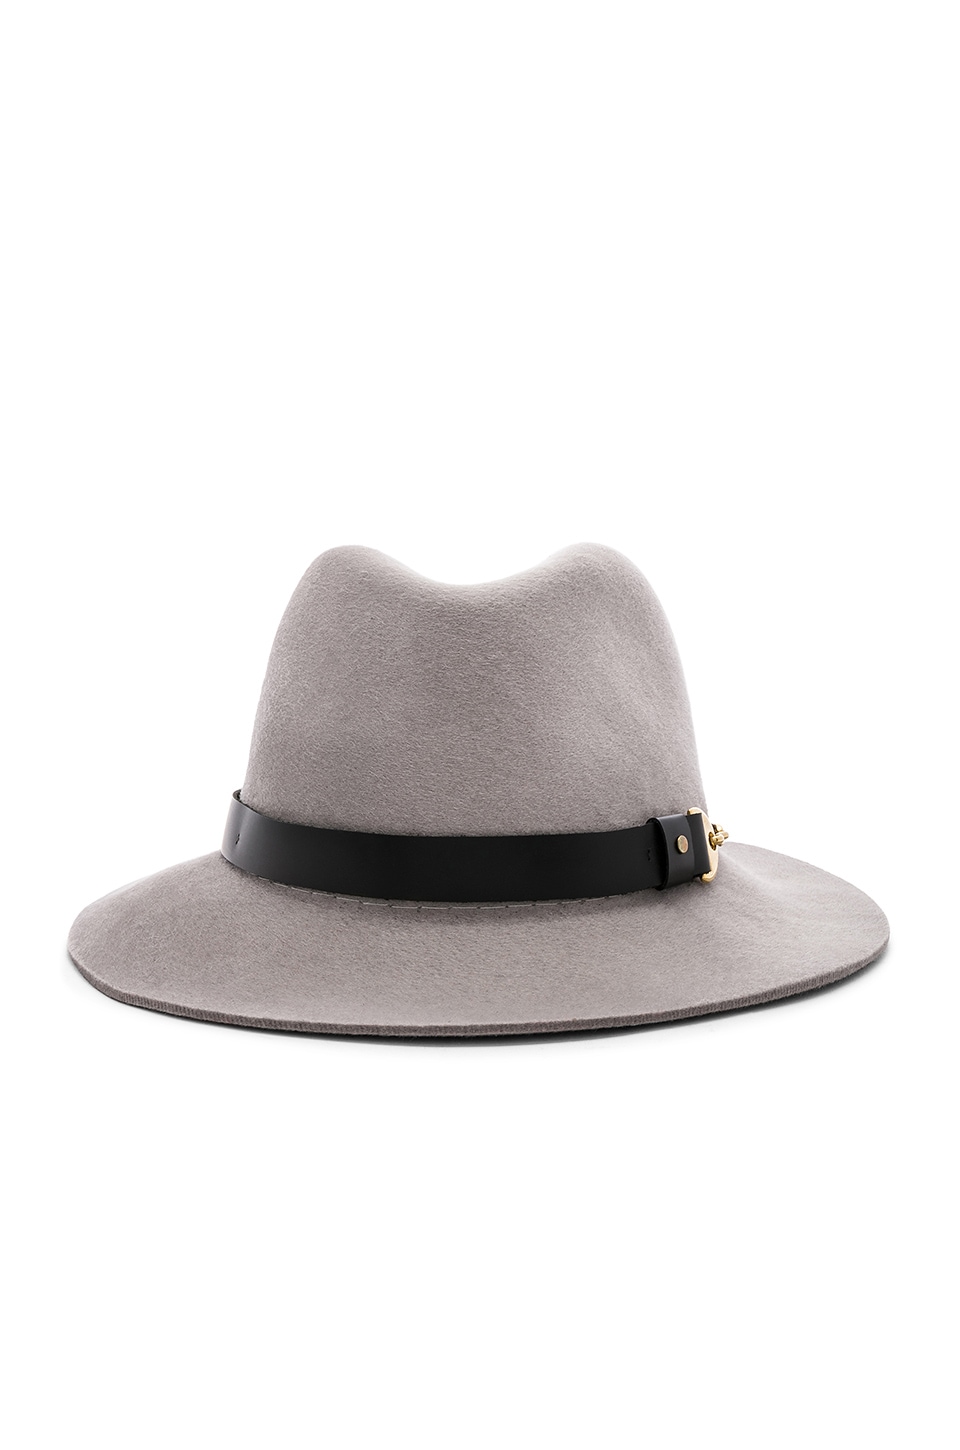 Bijou Van Ness Sunset Boulevard Hat in Silver & Black